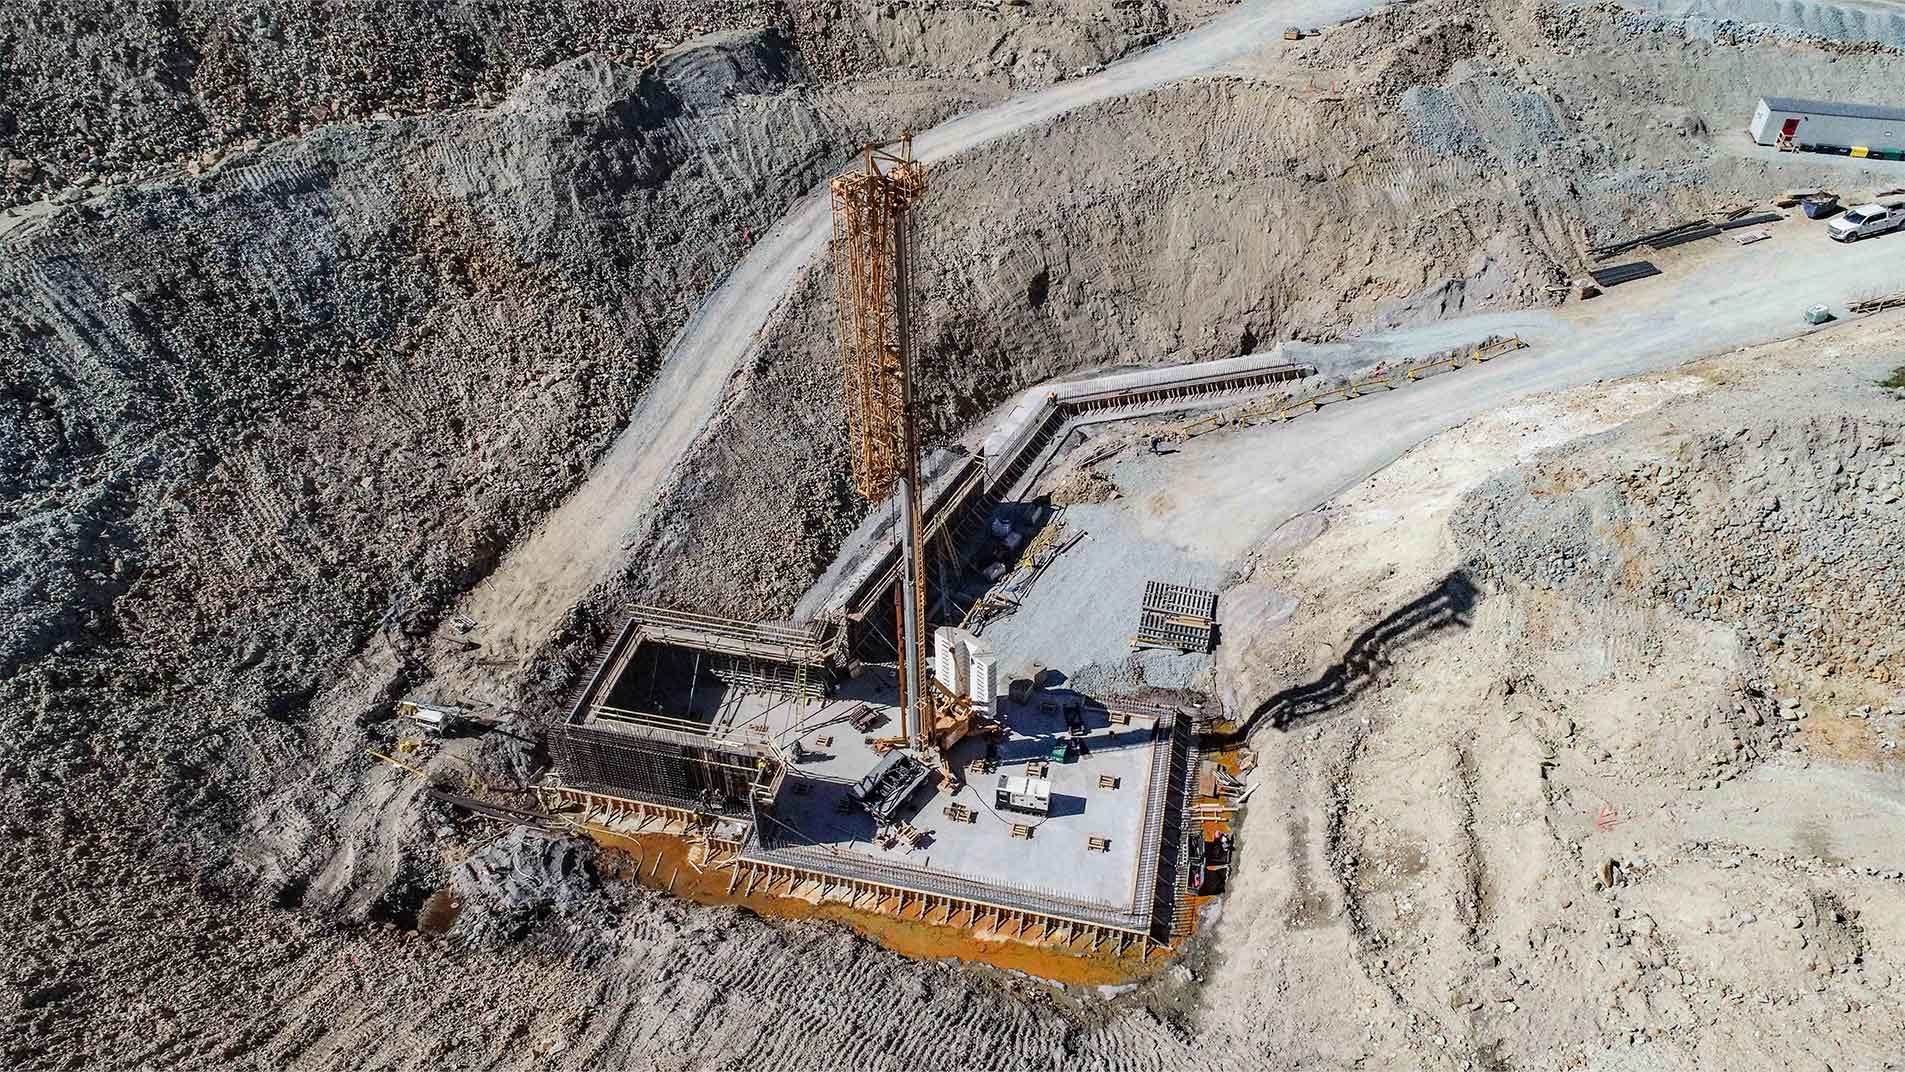 Prepareing crusher at the base of Gibraltar mine